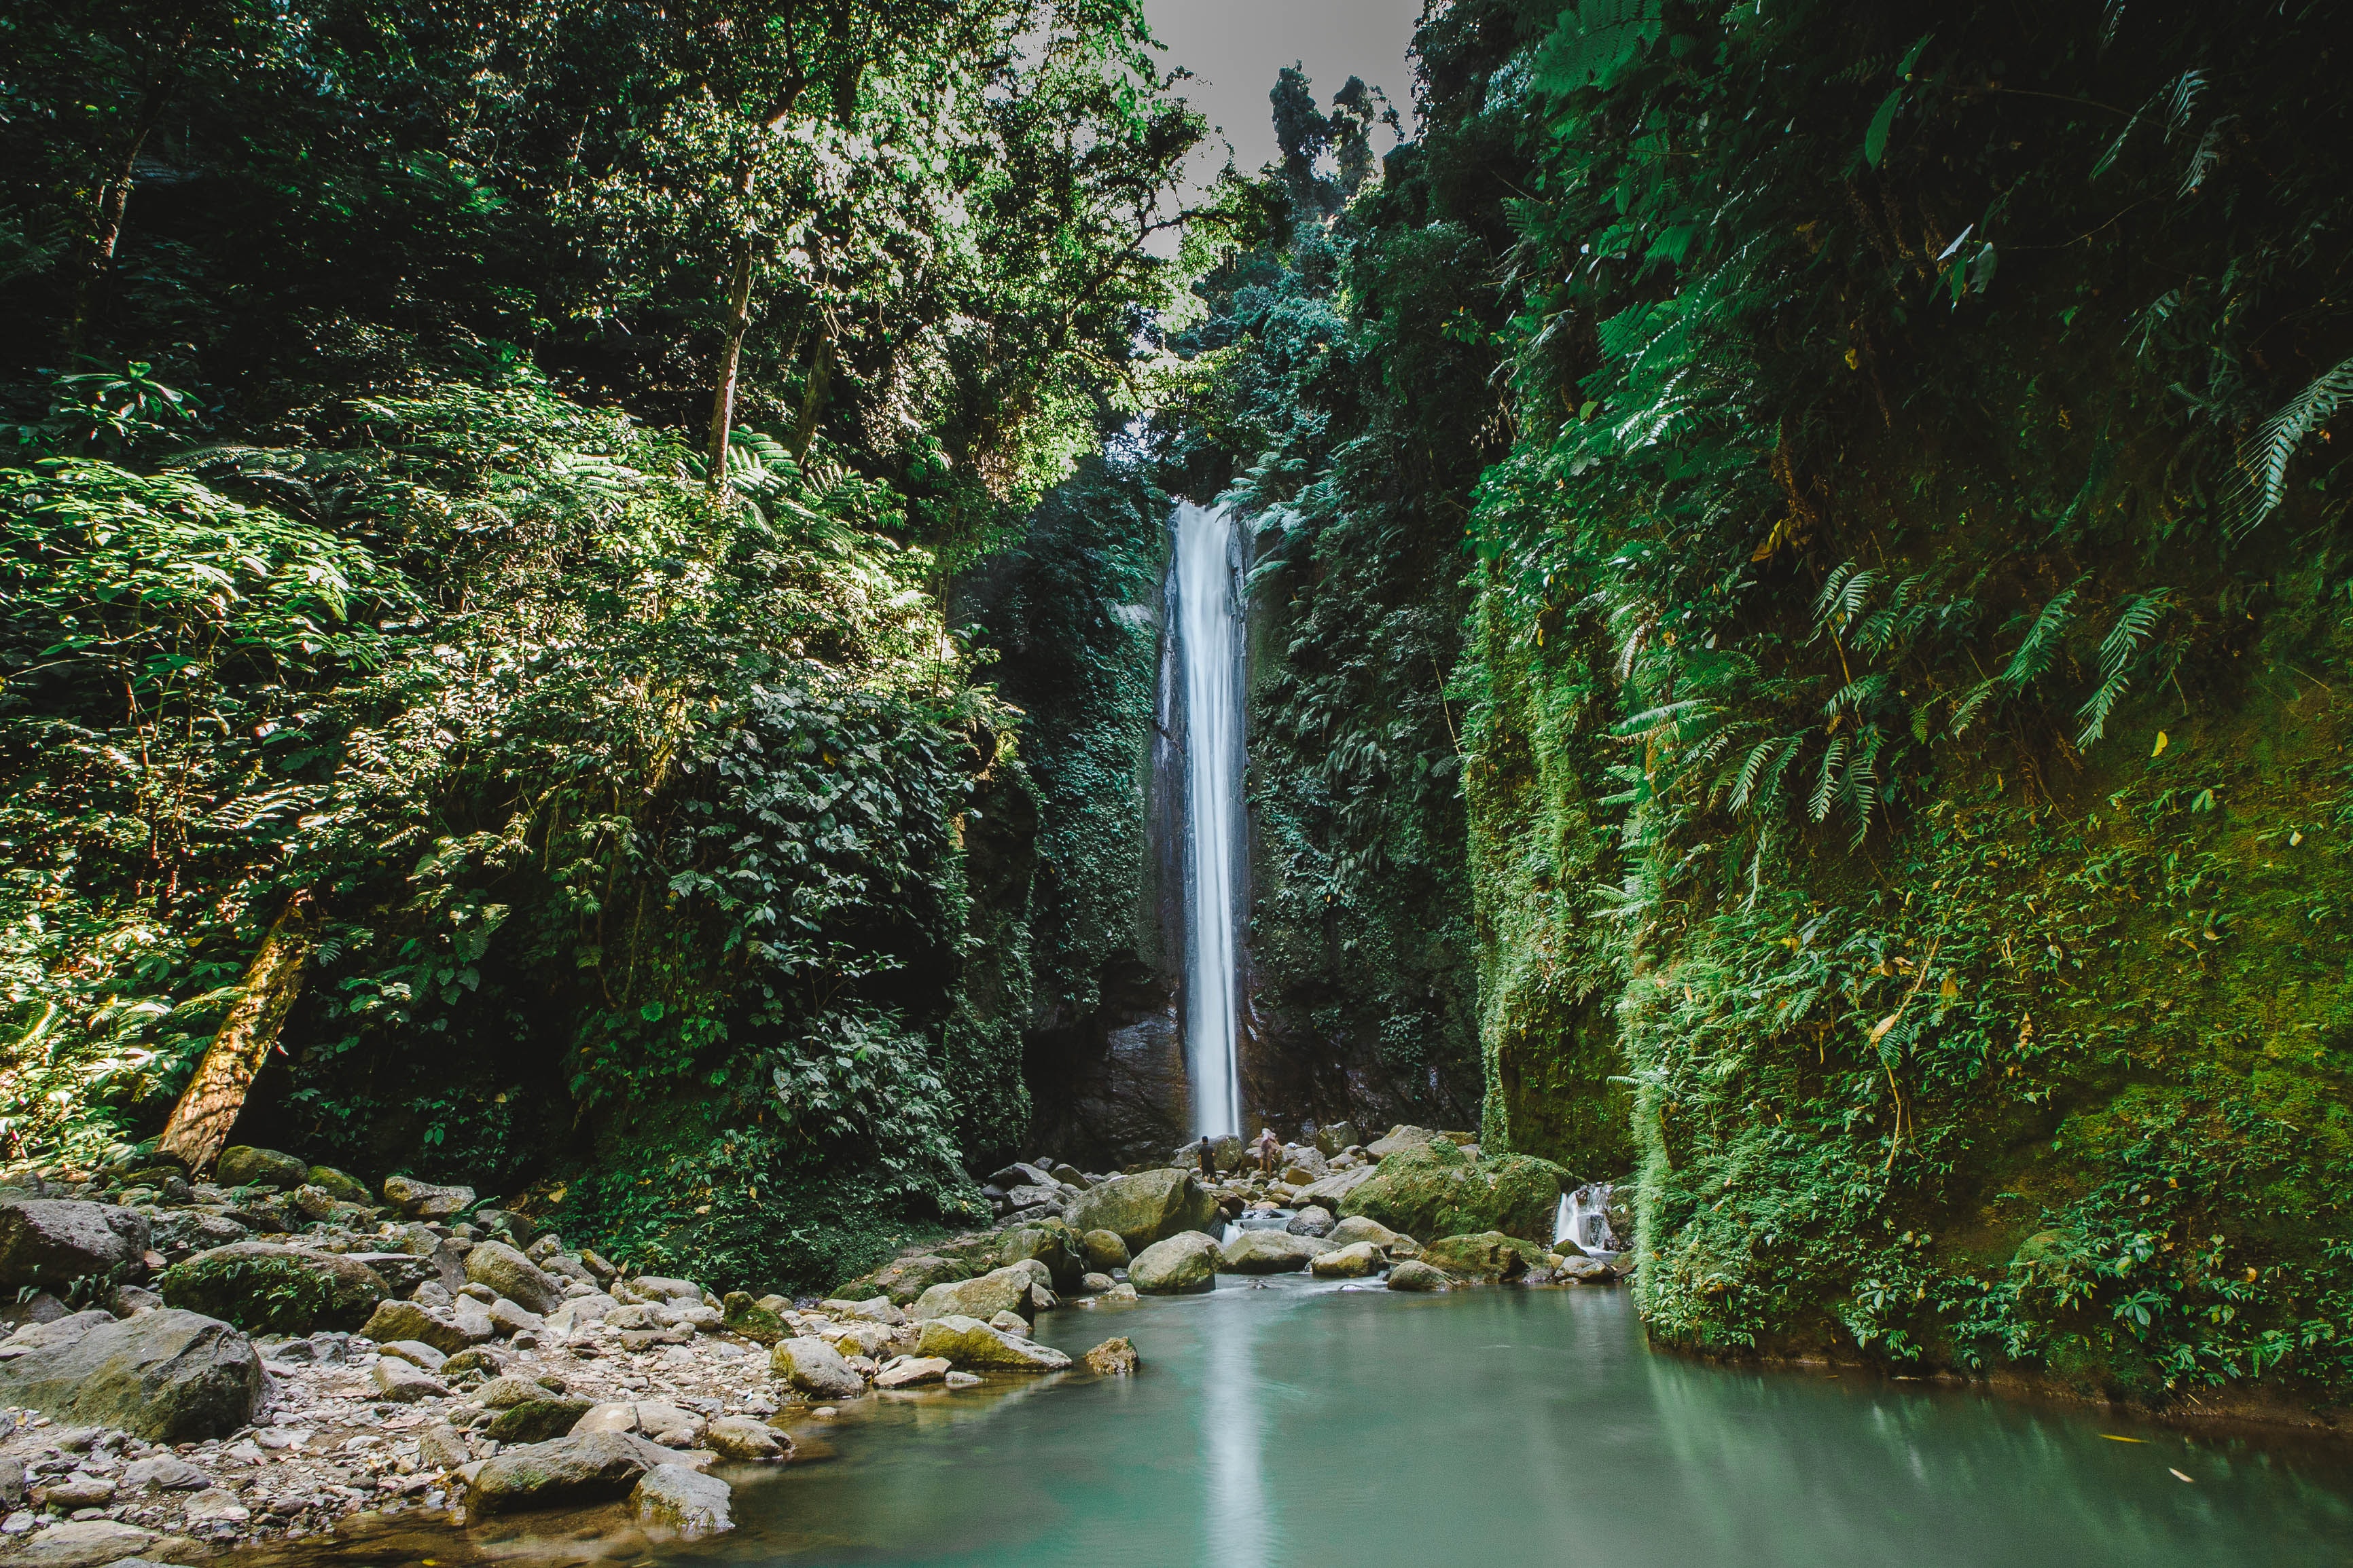 Waterfalls near green-leafed trees